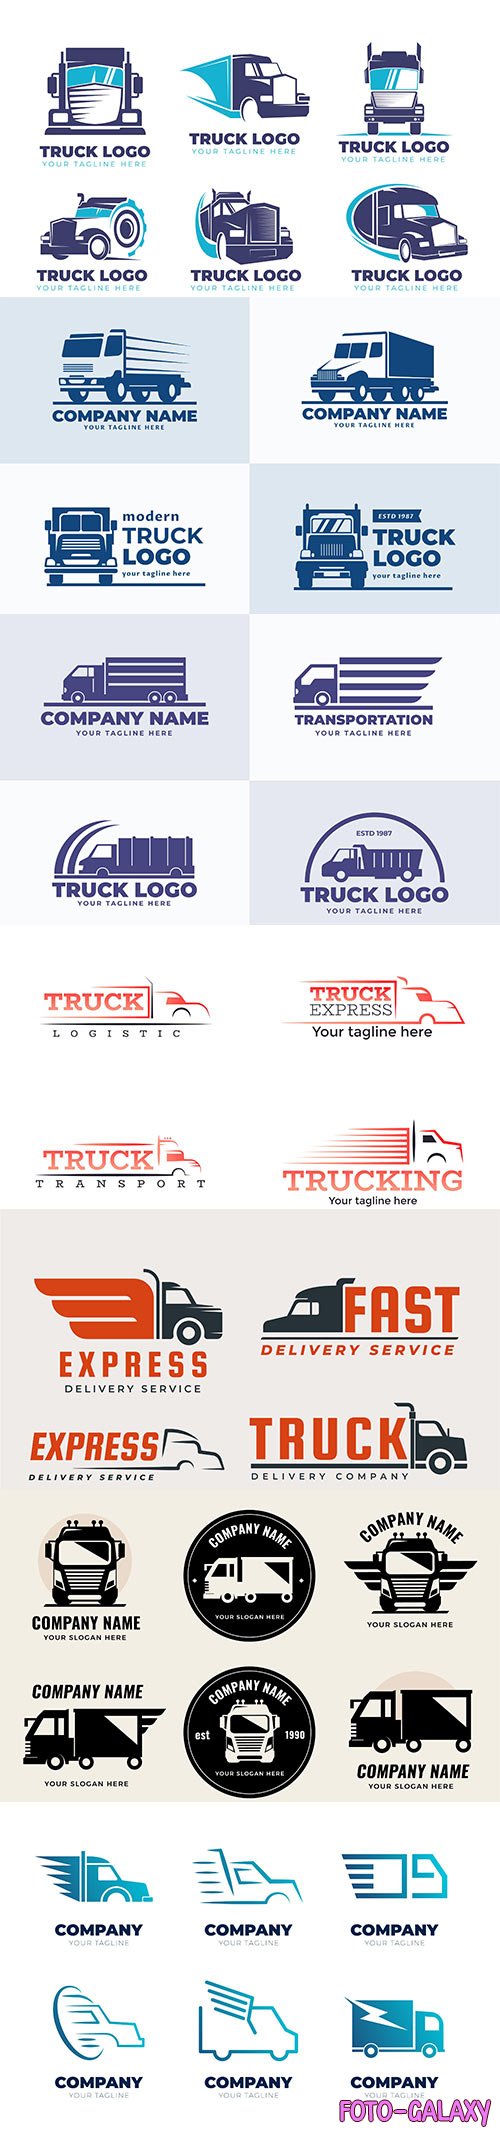 Truck logo vector design